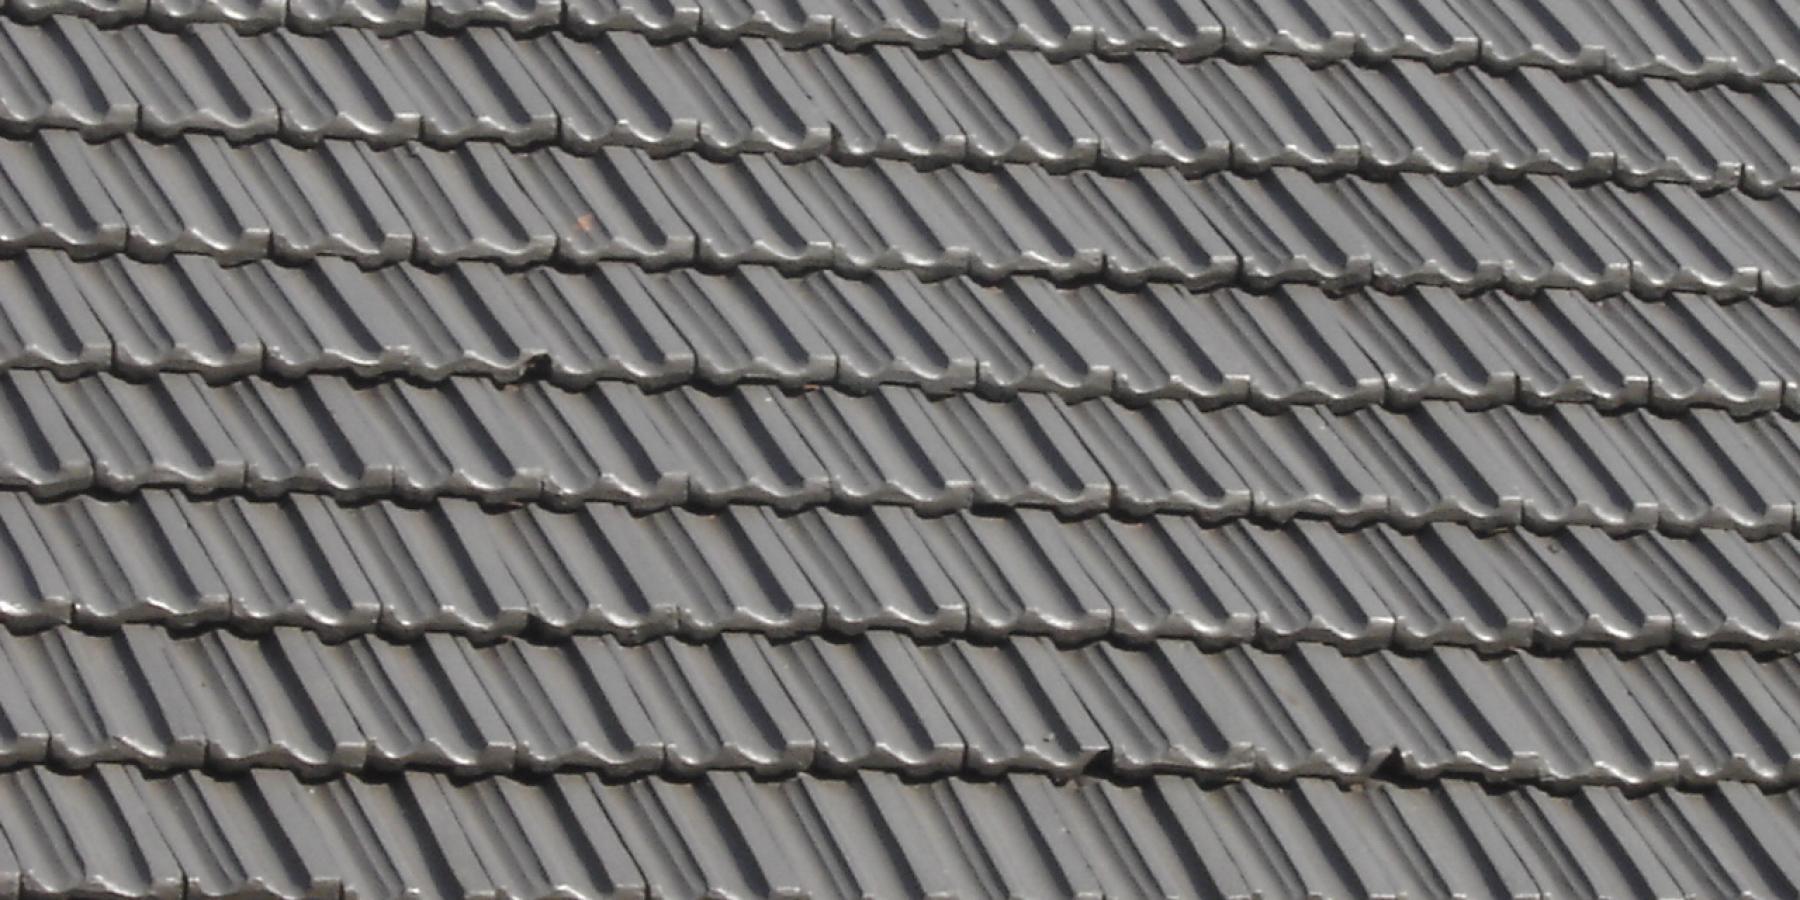 Tile roof restored with Australian elastomeric coa